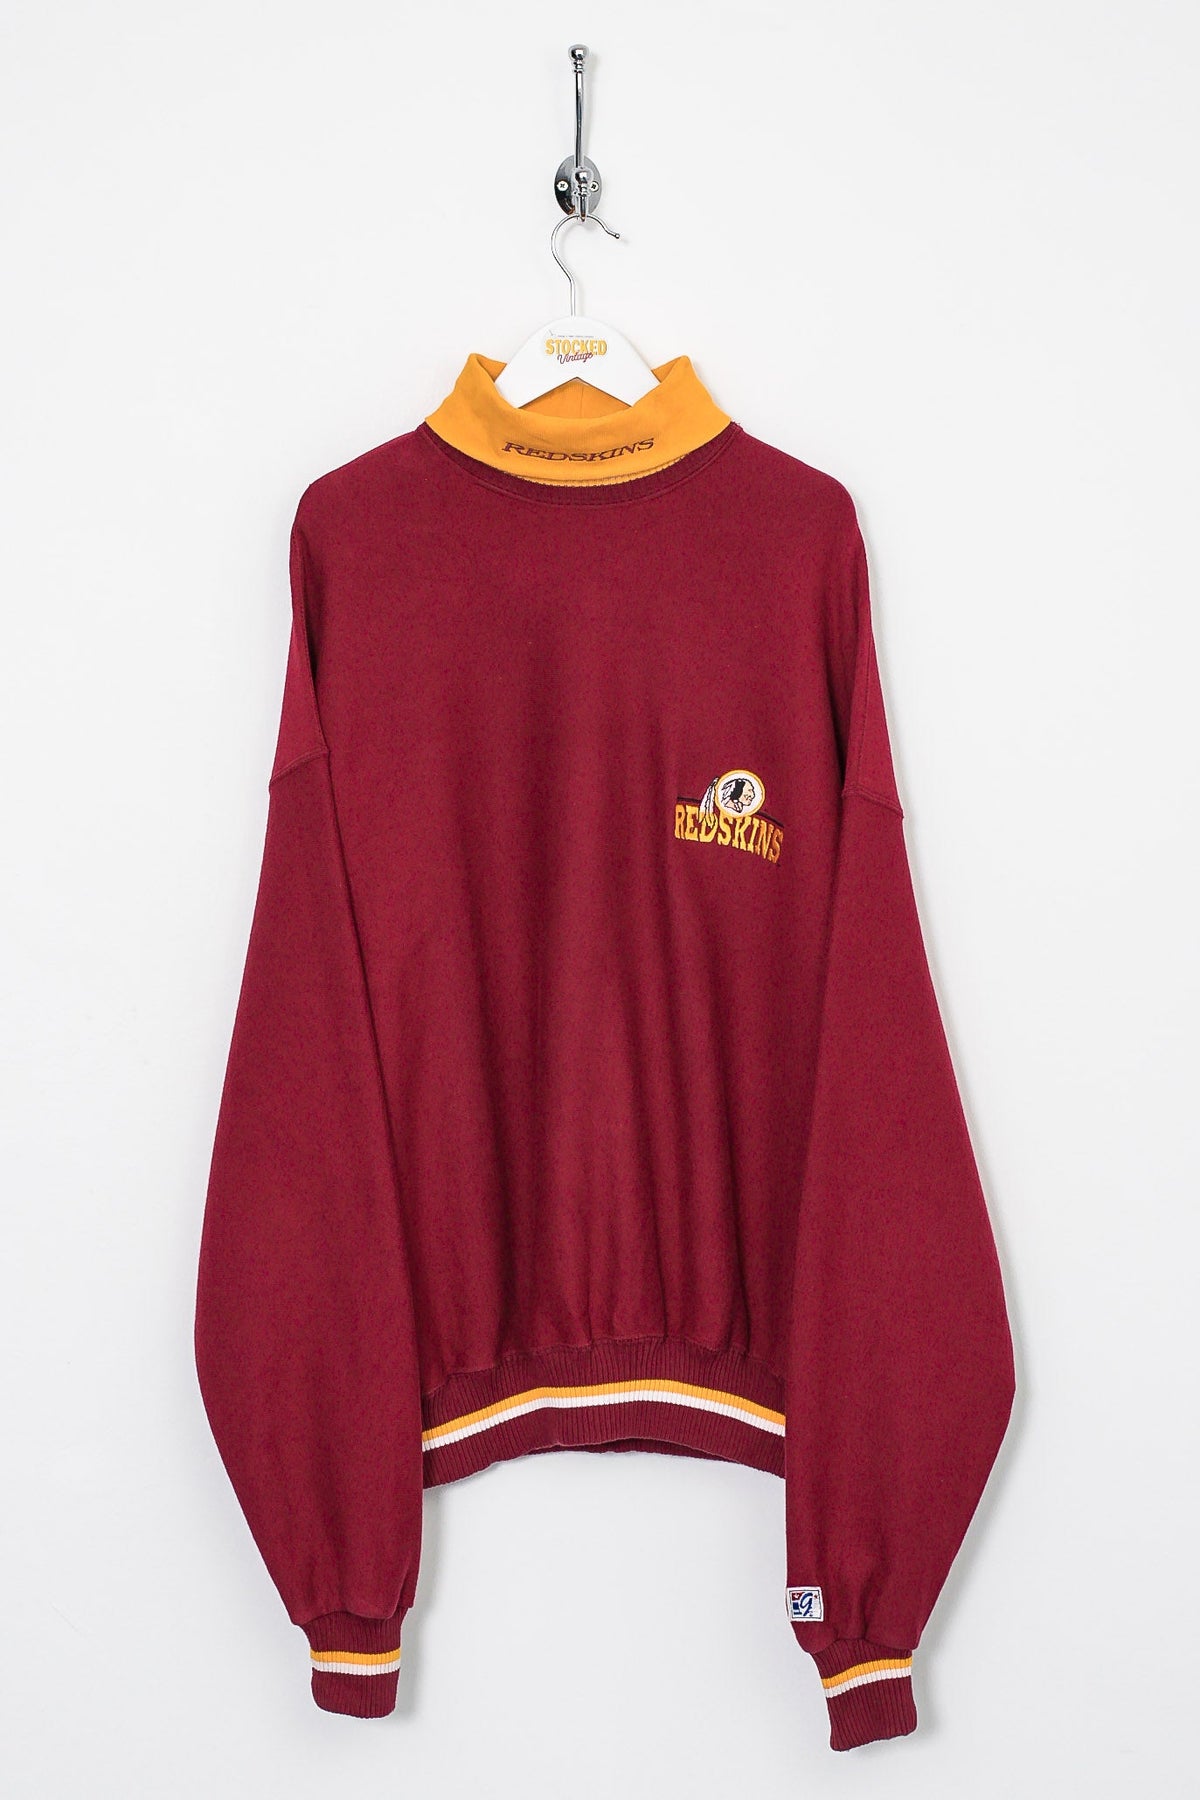 90s NFL Washington Redskins Sweatshirt (XL)